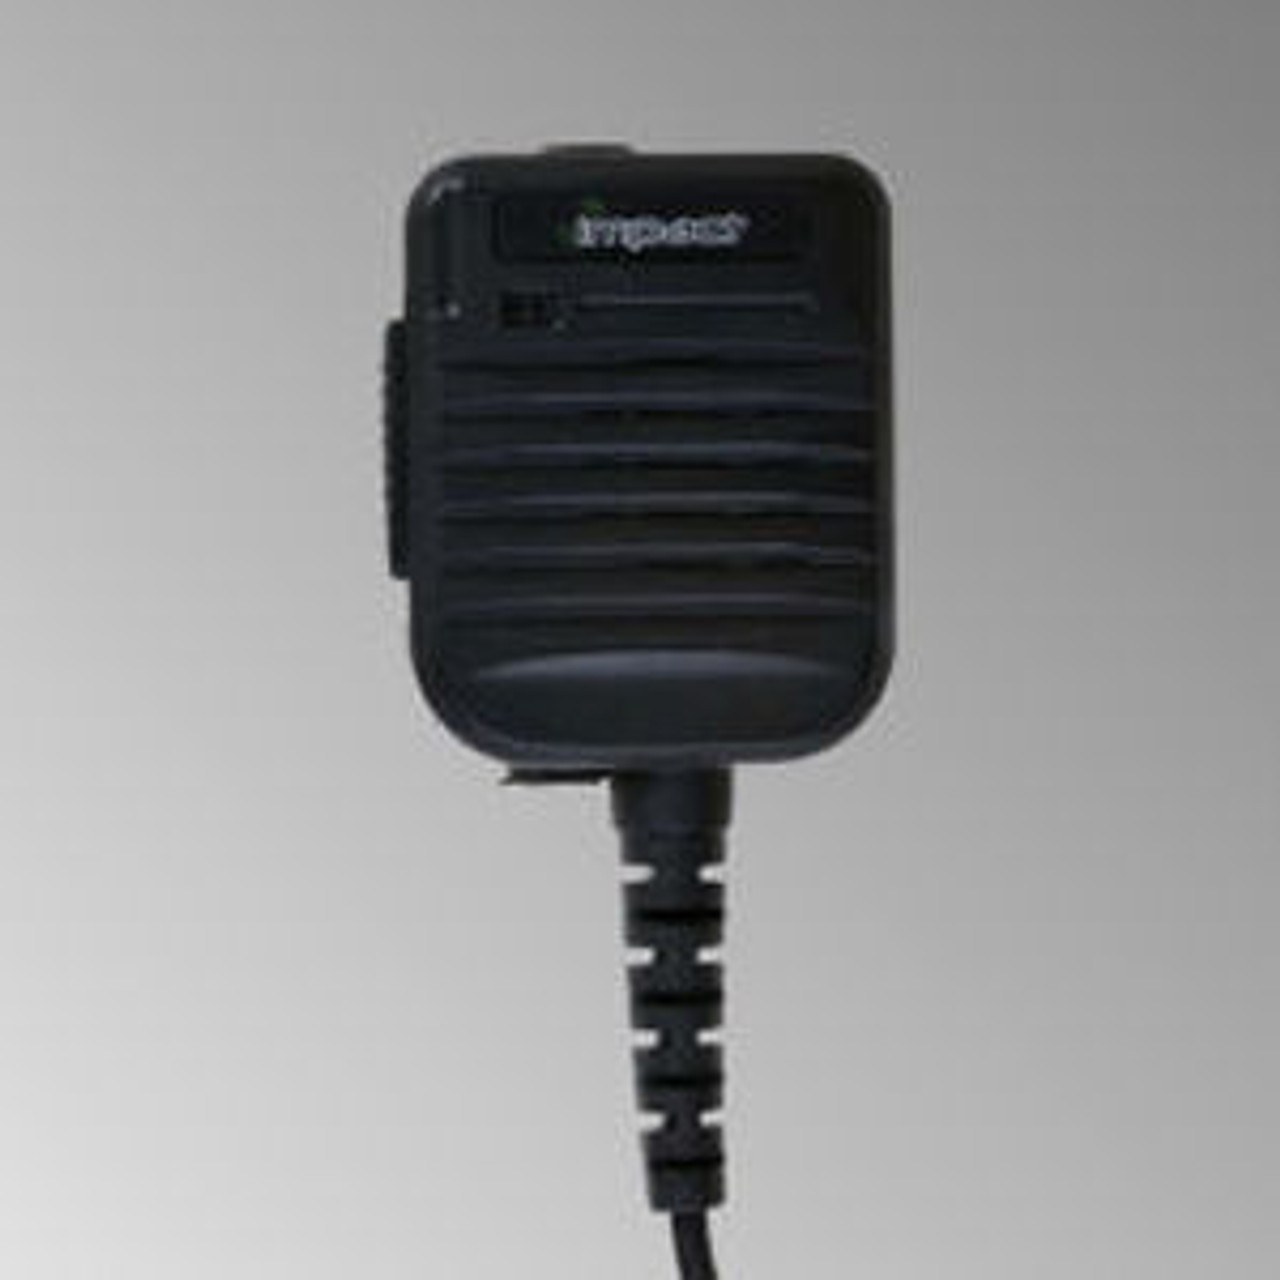 Motorola PR860 Ruggedized IP67 Public Safety Speaker Mic.